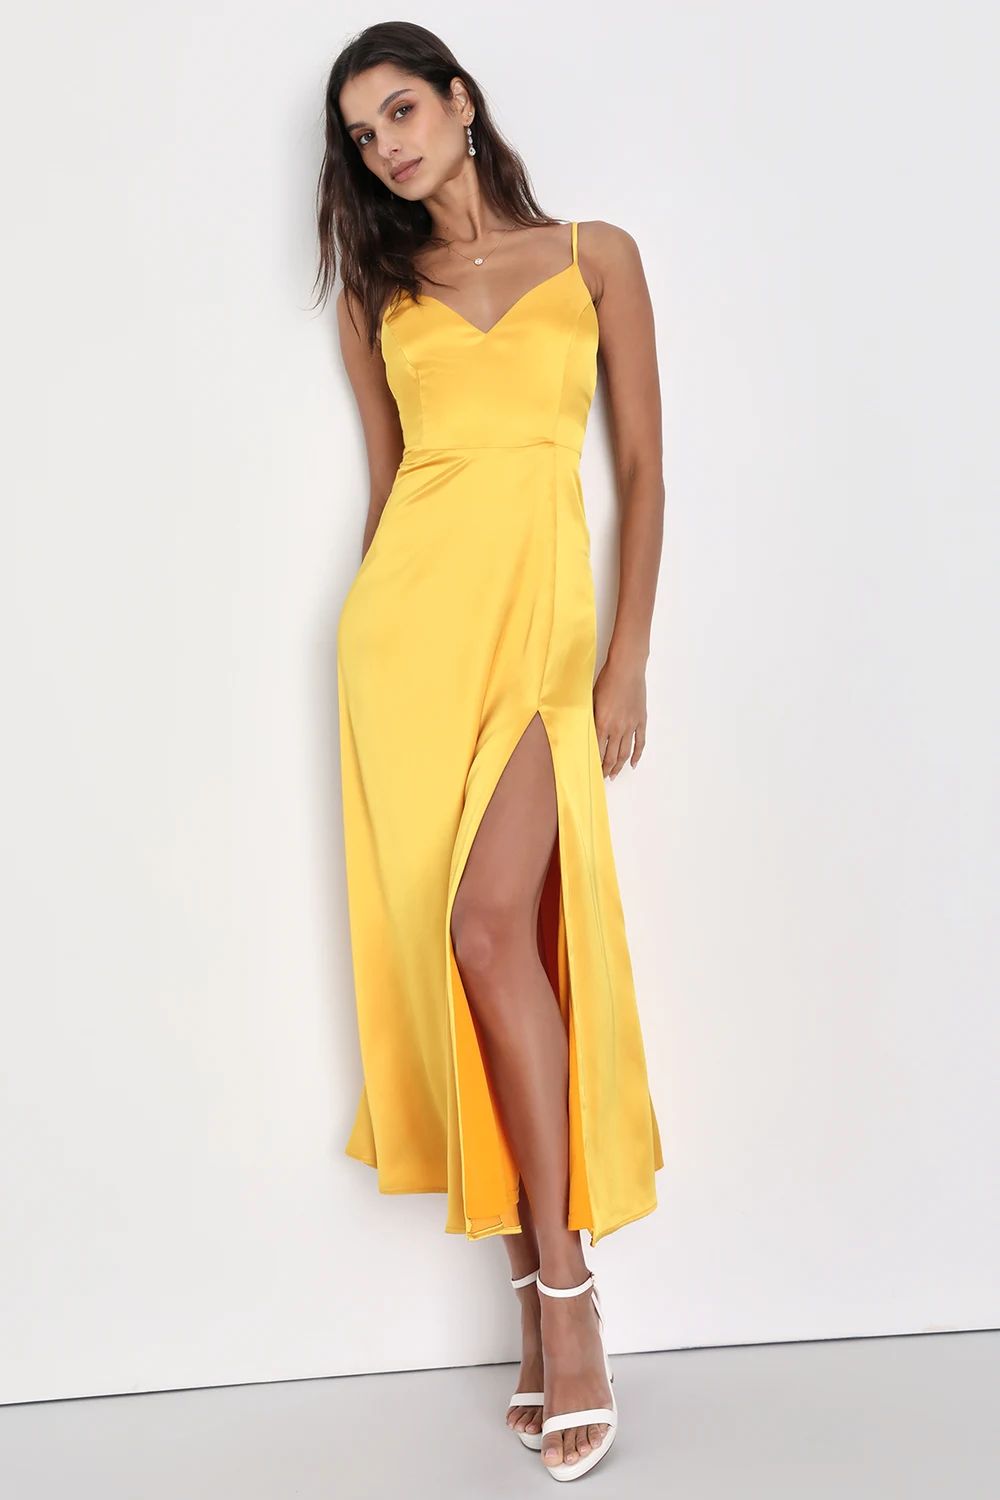 Always Audacious Marigold Yellow Satin Tie-Back Midi Dress | Lulus